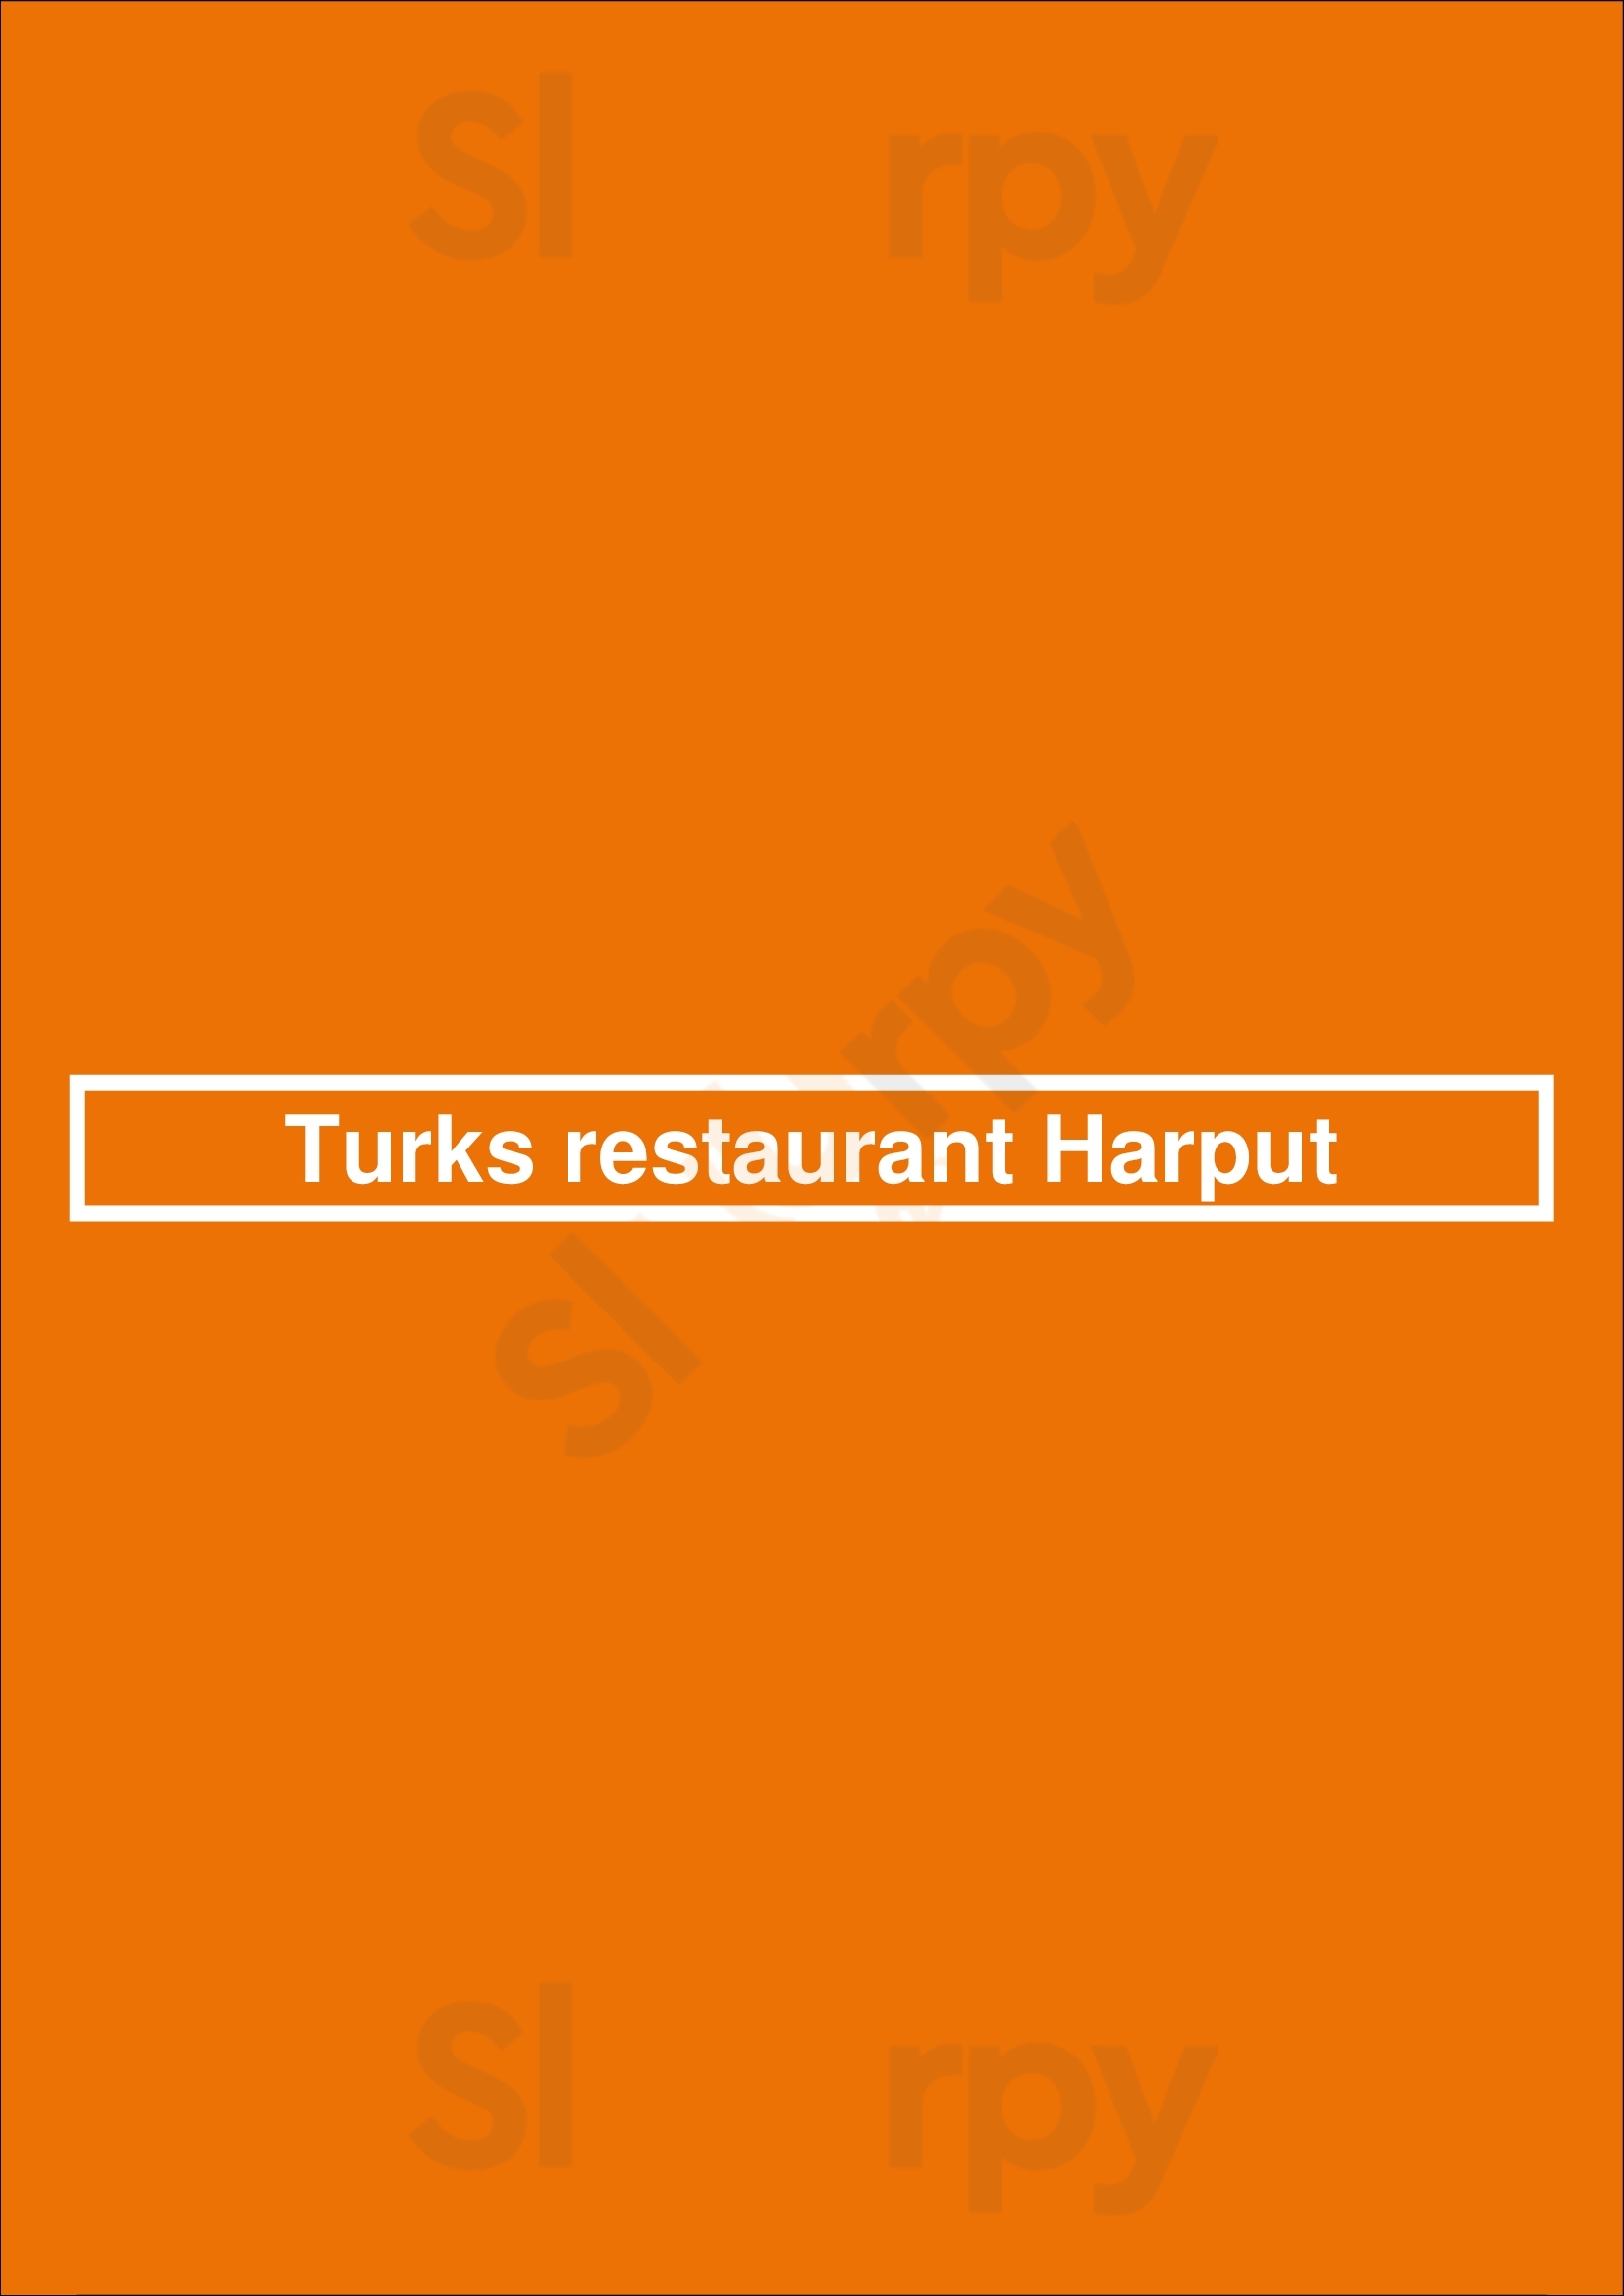 Turks Restaurant Harput Wassenaar Menu - 1